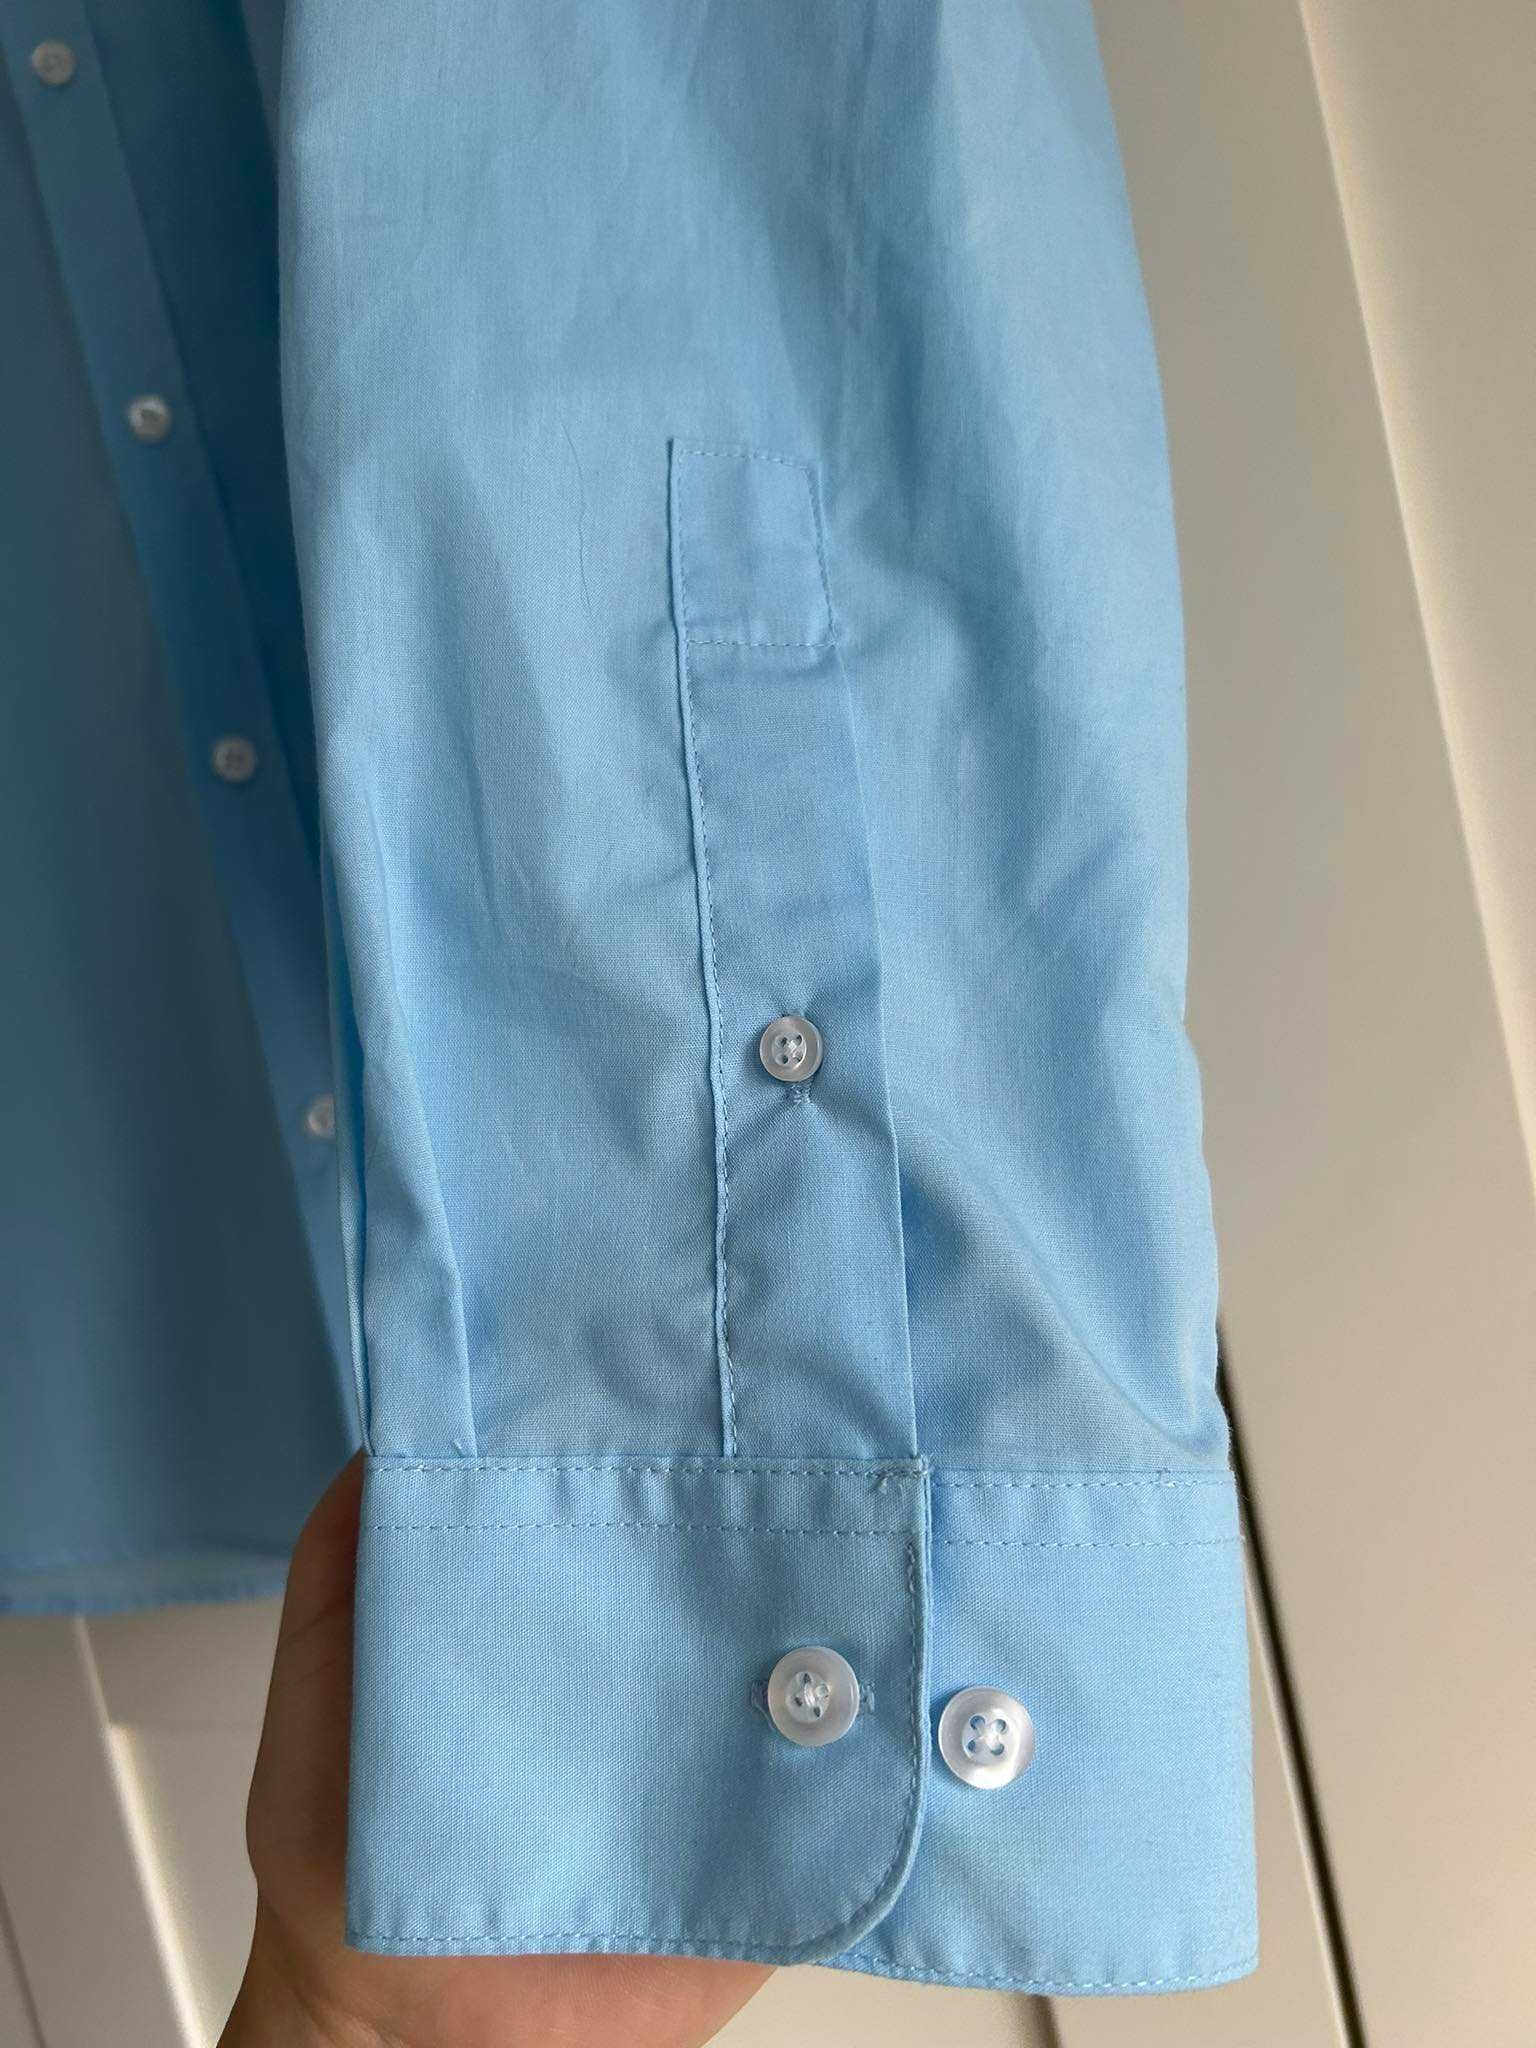 Niebieska koszula męska XL SMOG New Yorker - slim fit, jak nowa